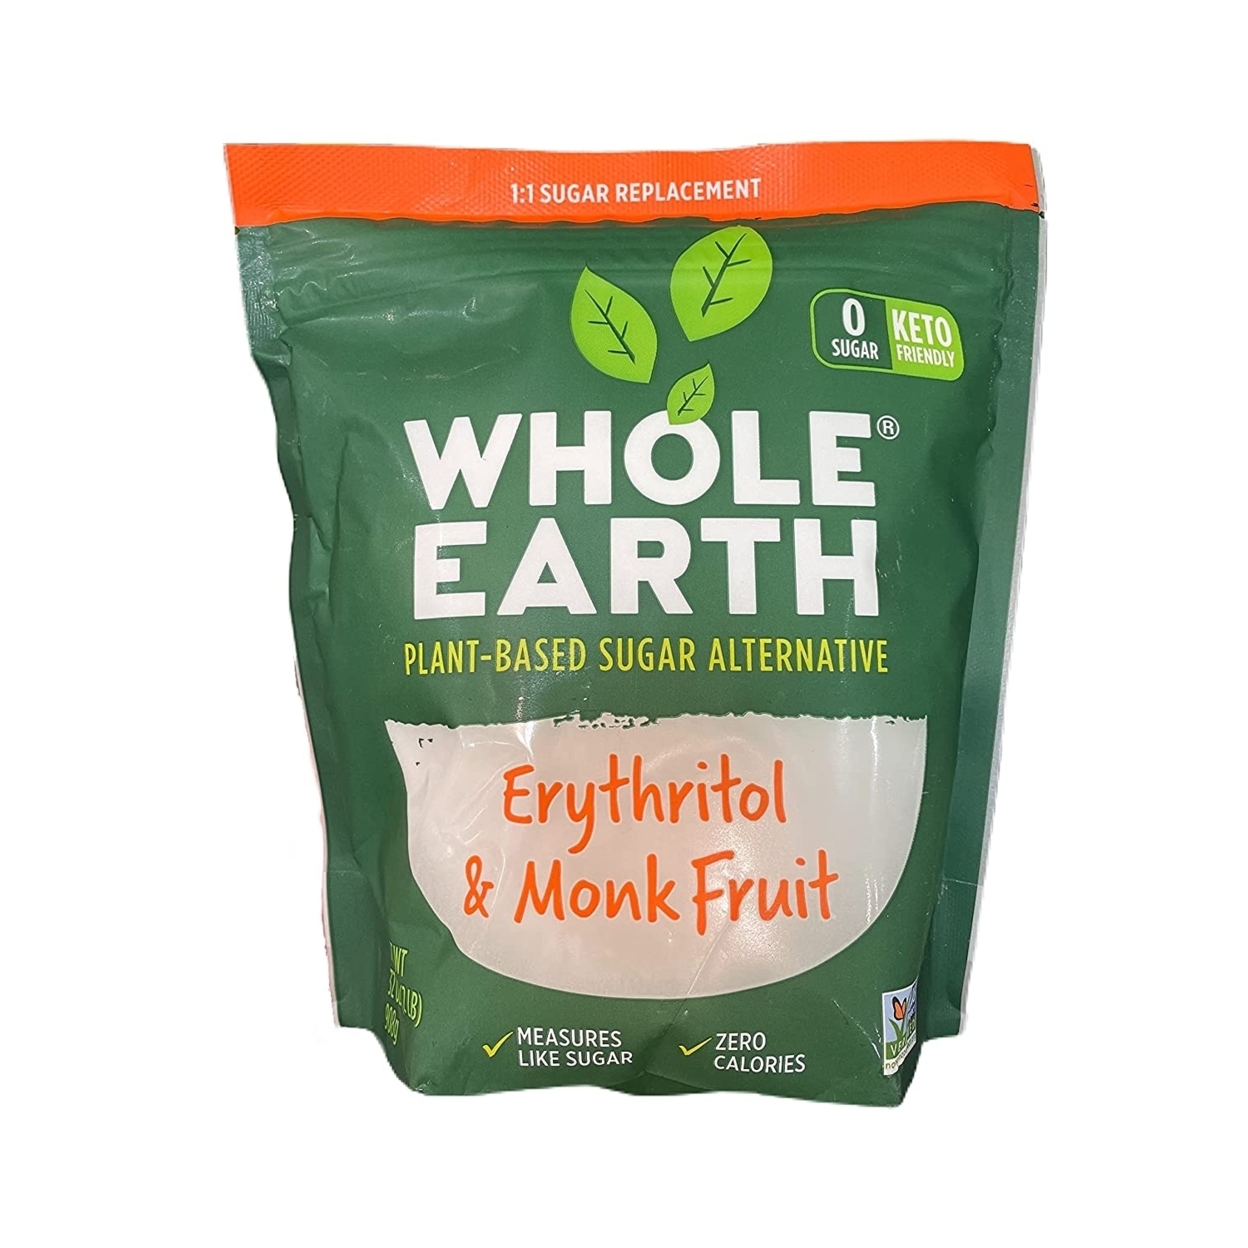 Whole Earth Plant-Based Sugar Alternative, Erythritol & Monk Fruit, 32 Ounce